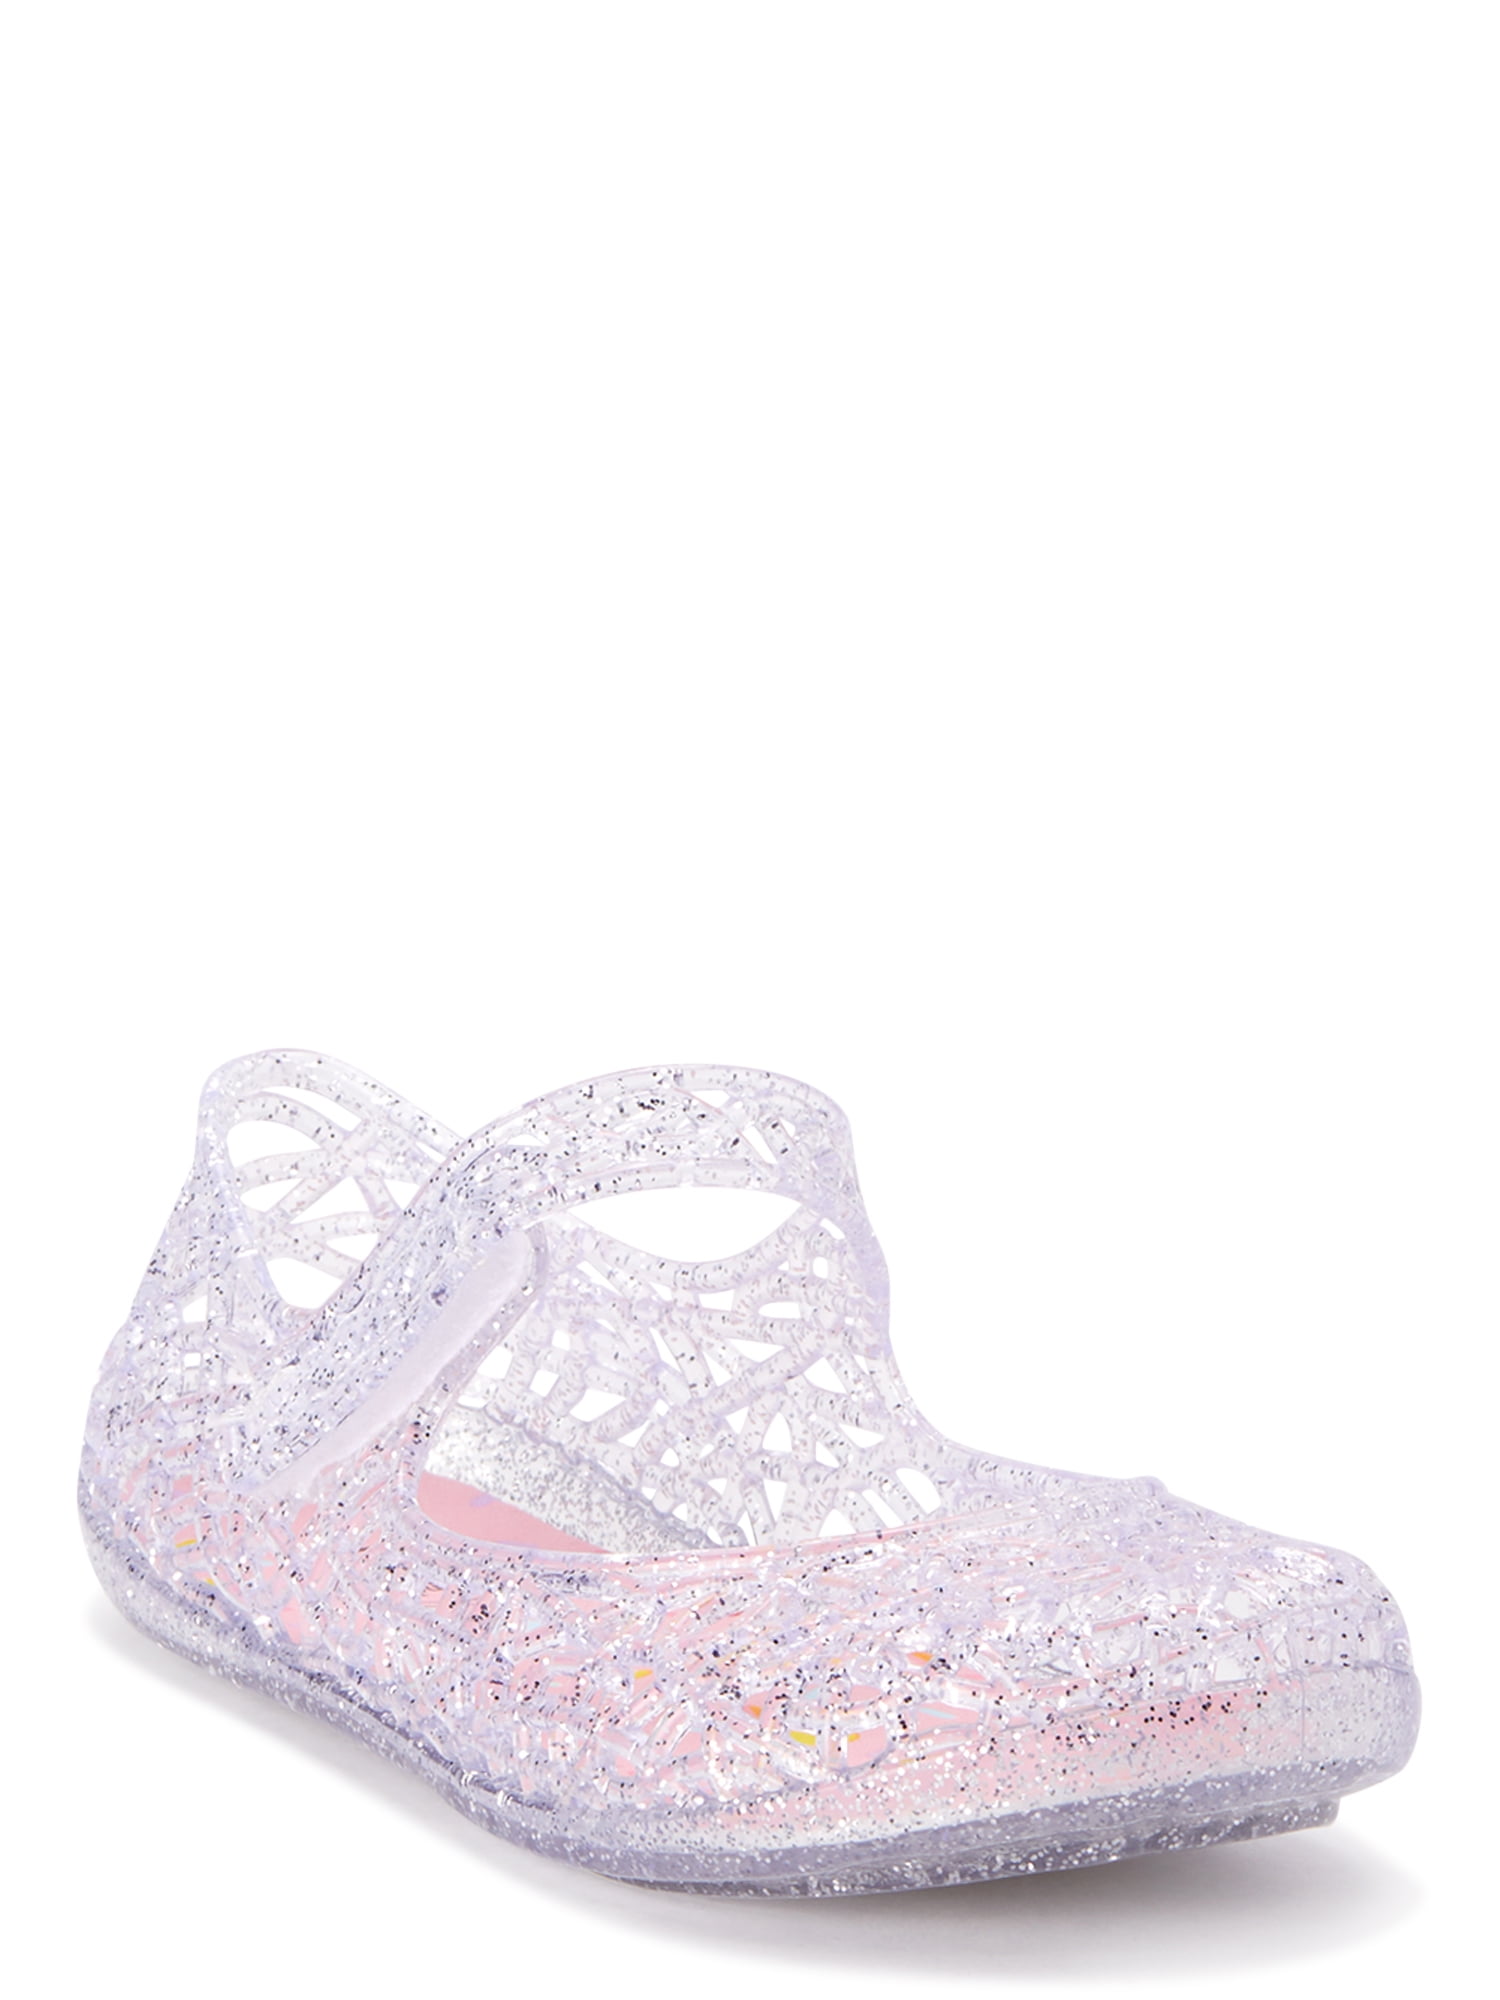 Garanimals Toddler Girls Jelly Sandals Clear W//Glitter Sparkles Size 5 NEW